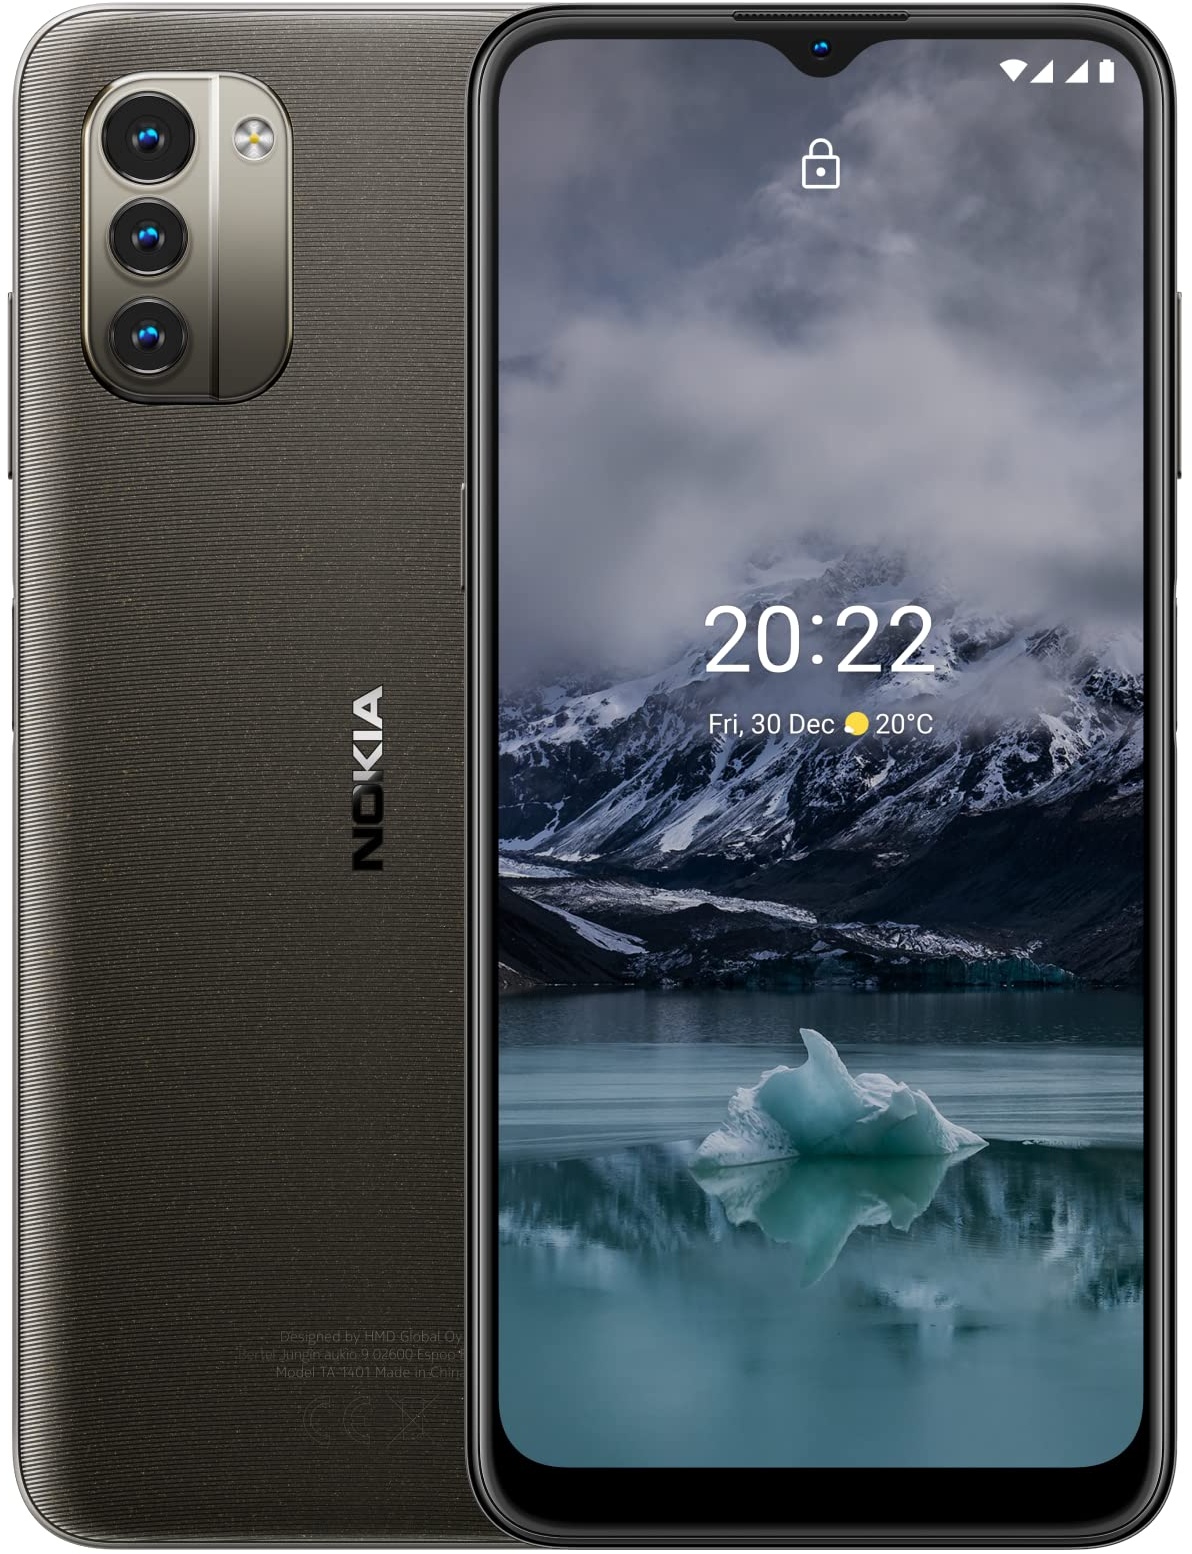 Nokia G11 Smartphone, 6,5-Zoll-HD+, 90-Hz-Bildfrequenz, Android 11, Google Assistant, 3 GB RAM/32 GB ROM, uSD Unterstützt bis 512 GB, 5050 mAh, 13 MP, 2 MP Makro, 18-W-Schnellladekompatibel, Charcoal